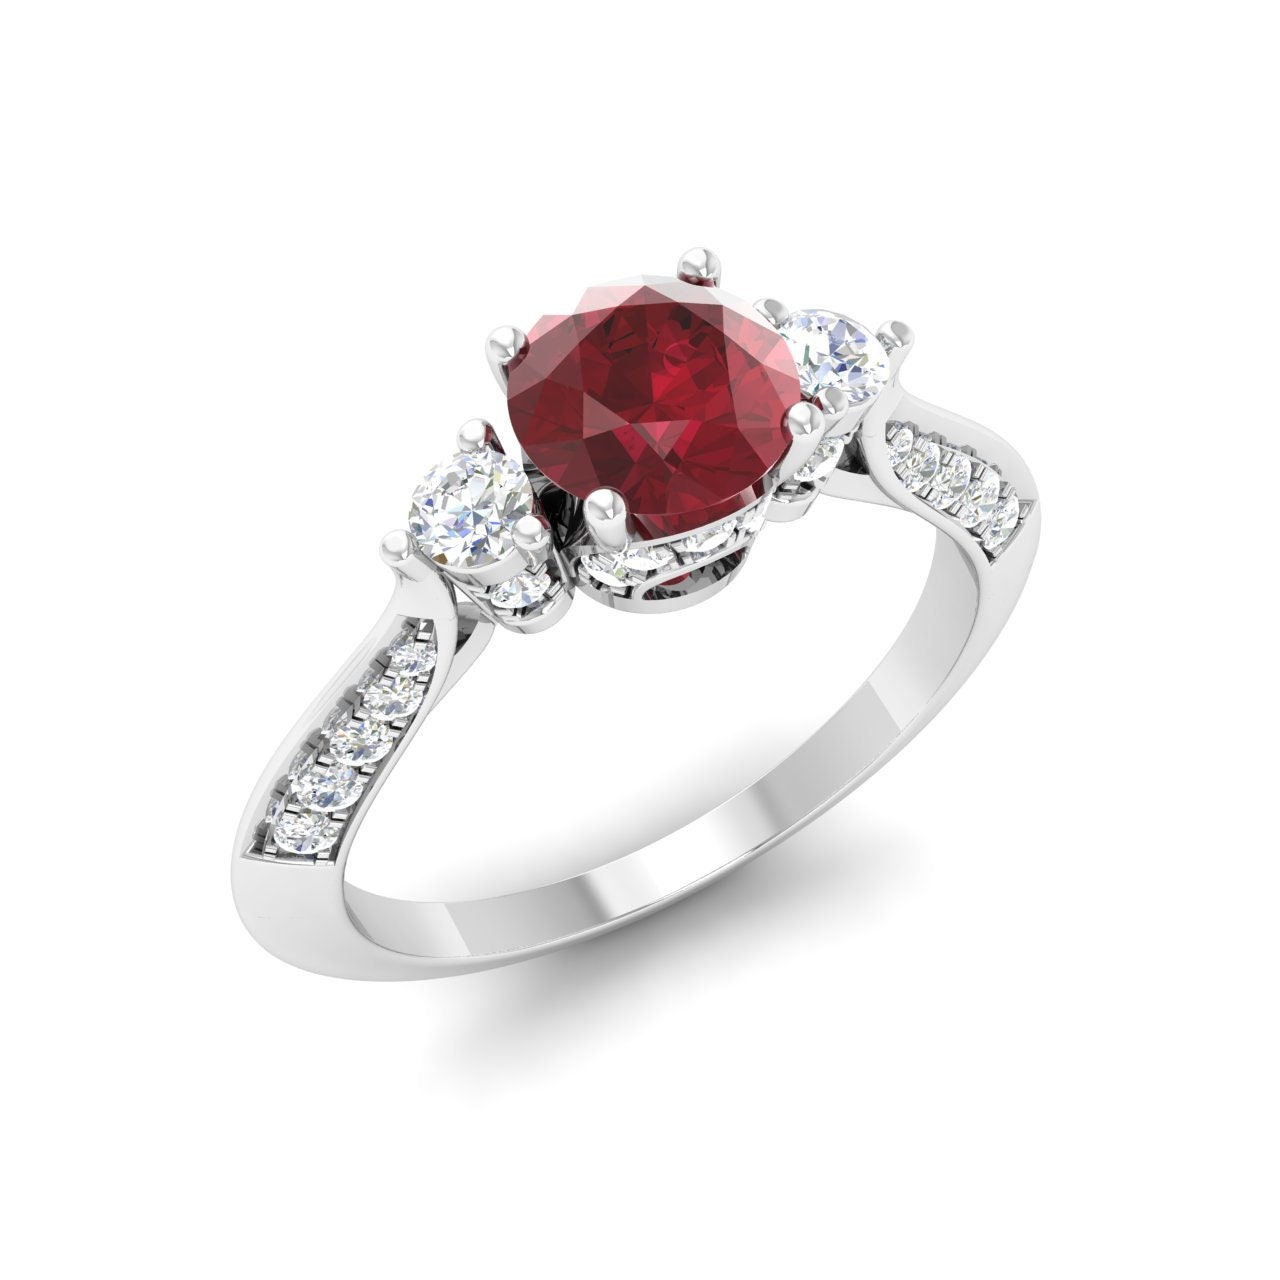 Round Cut Ruby Rings Ruby & Diamond Ring in 14k White Gold - Etsy